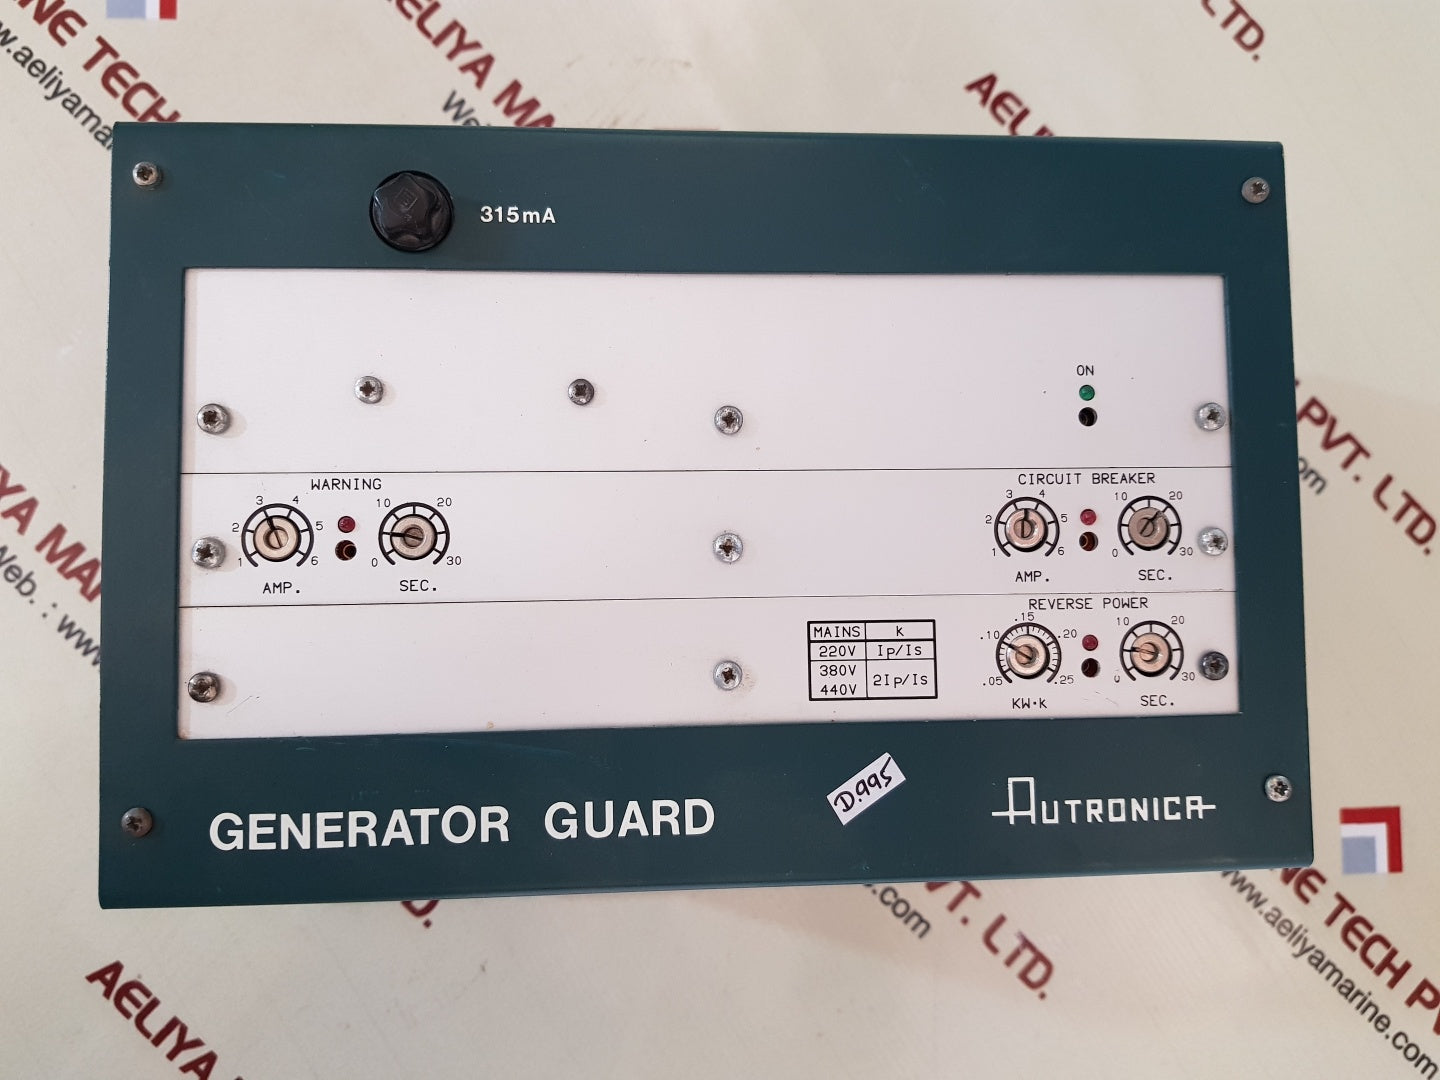 Autronica ak-3 5/1 generator guard